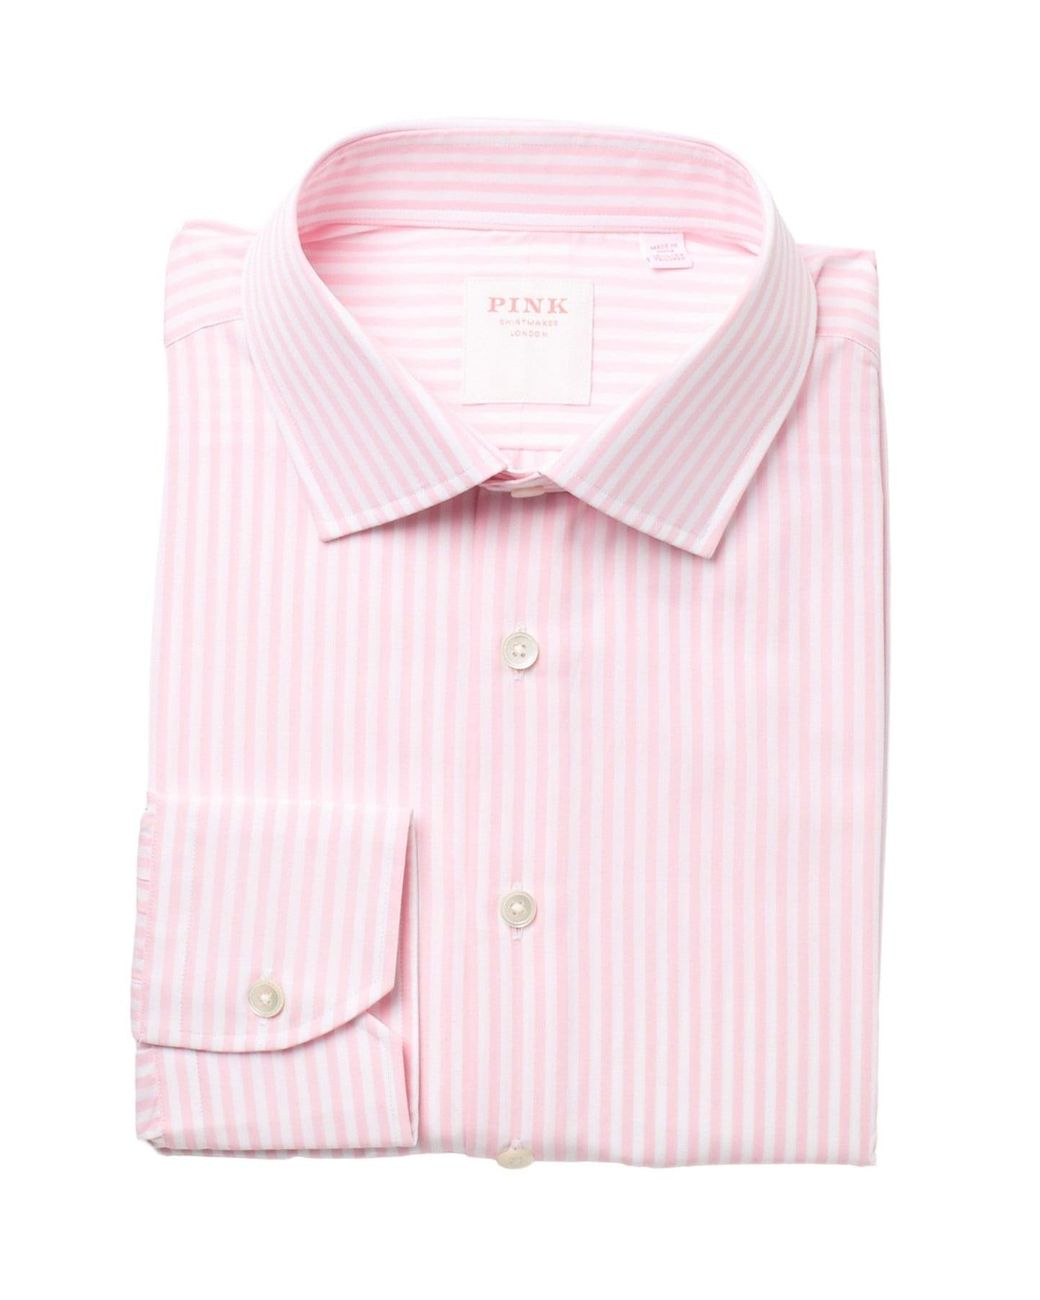 Thomas Pink Cotton Bengal Wide Stripe Dress Shirt in Pale Pink/White ...